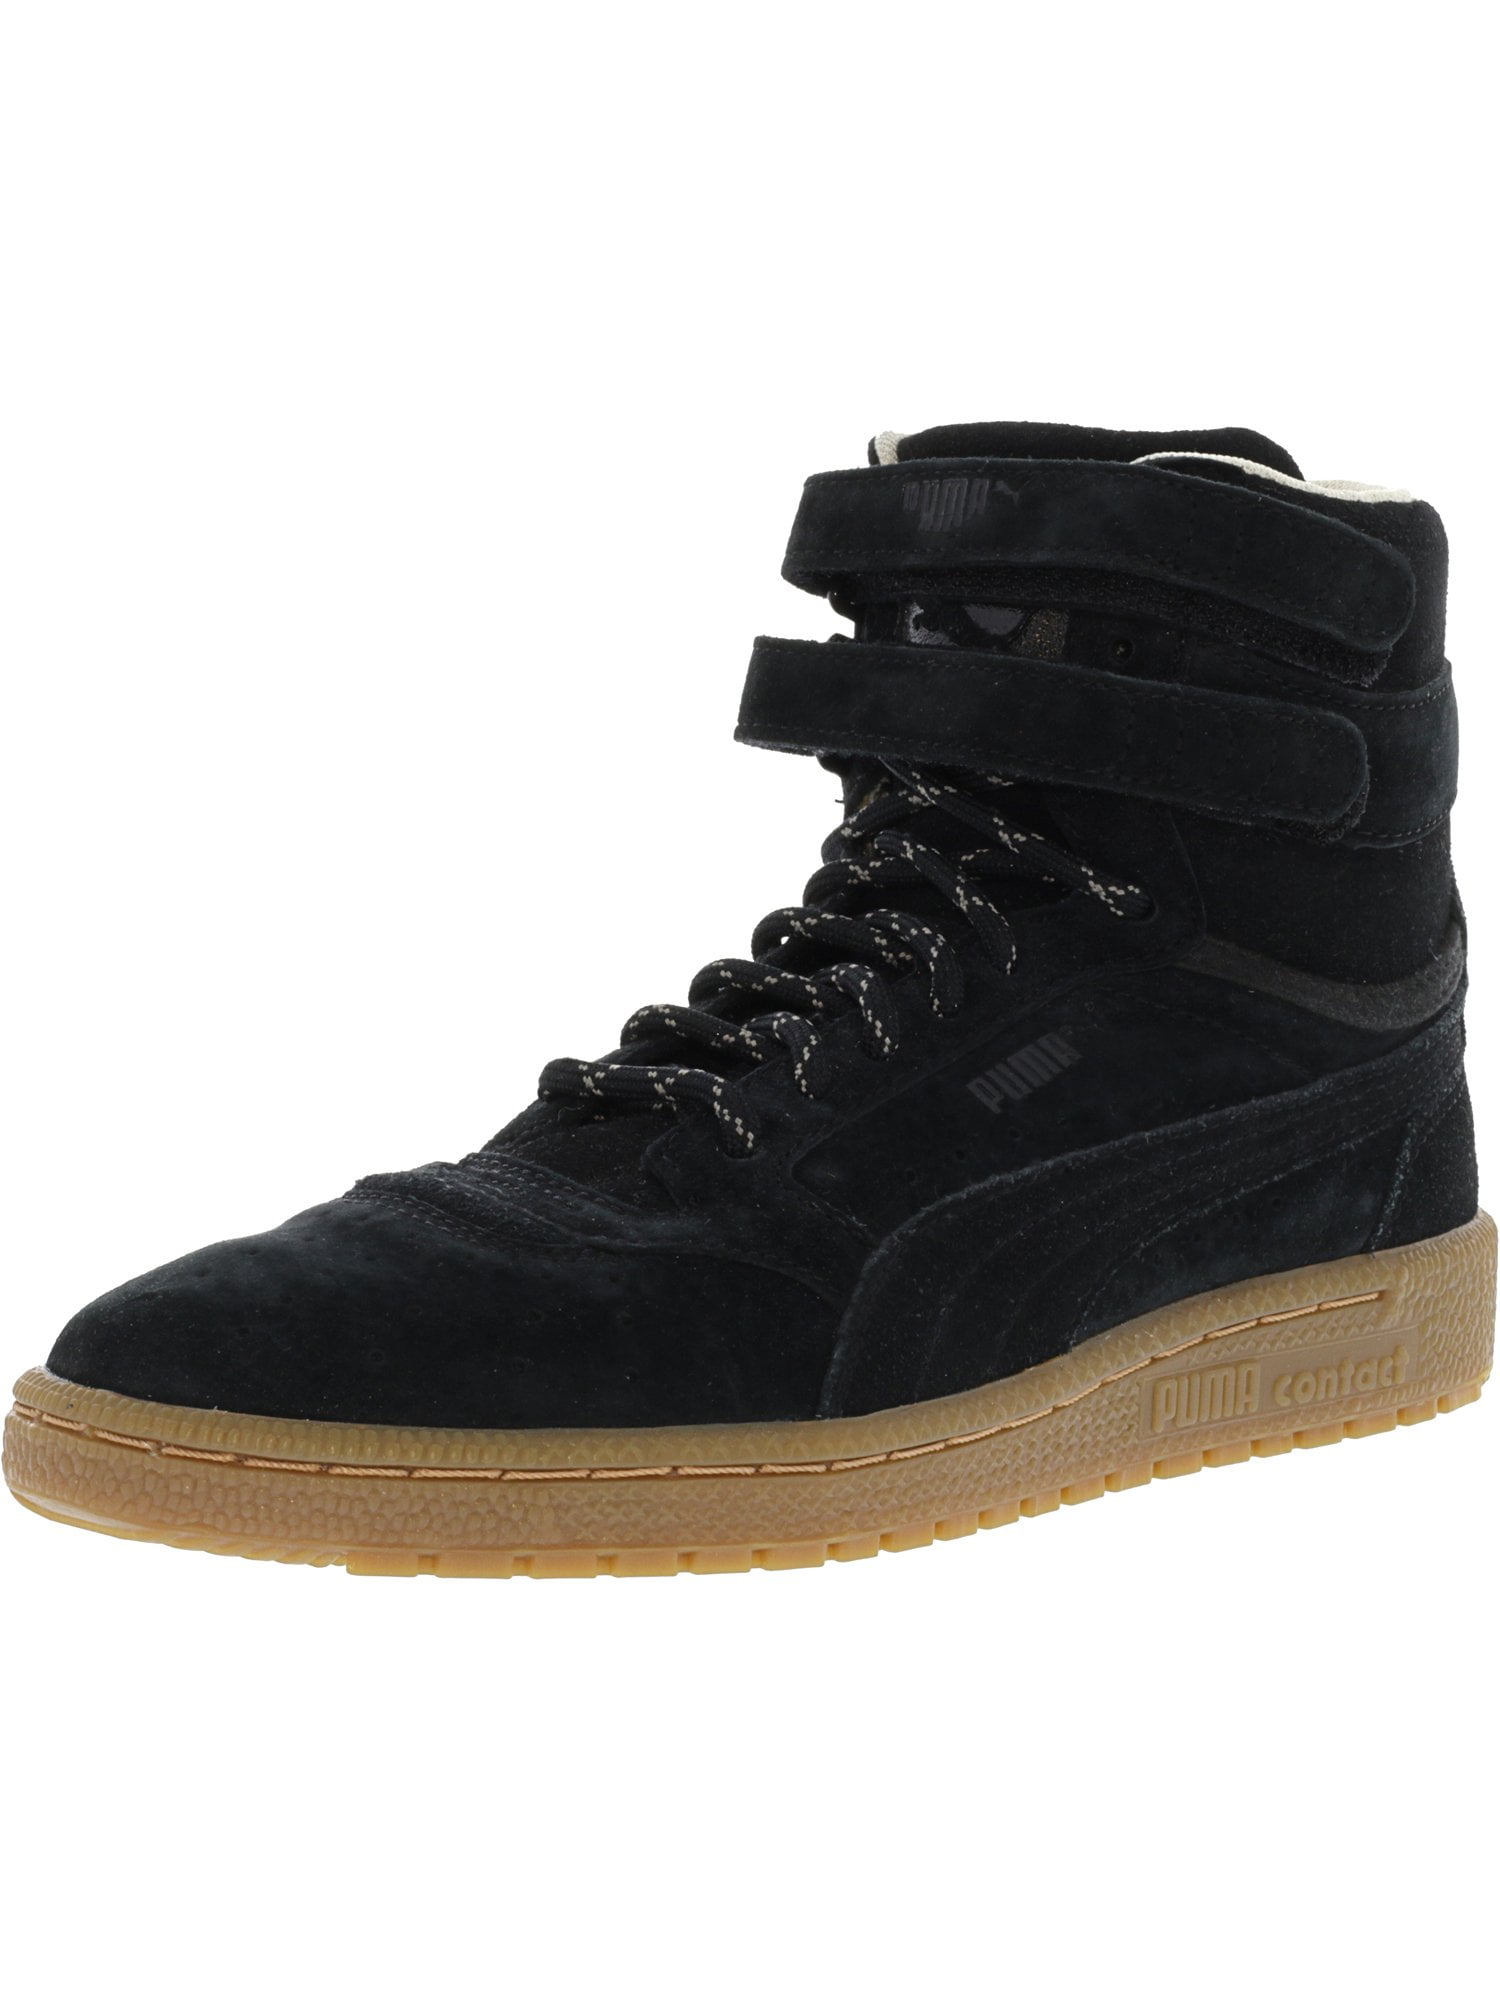 Puma Men's Sky Ii Hi Winterised Black High-Top Leather Basketball Shoe ...